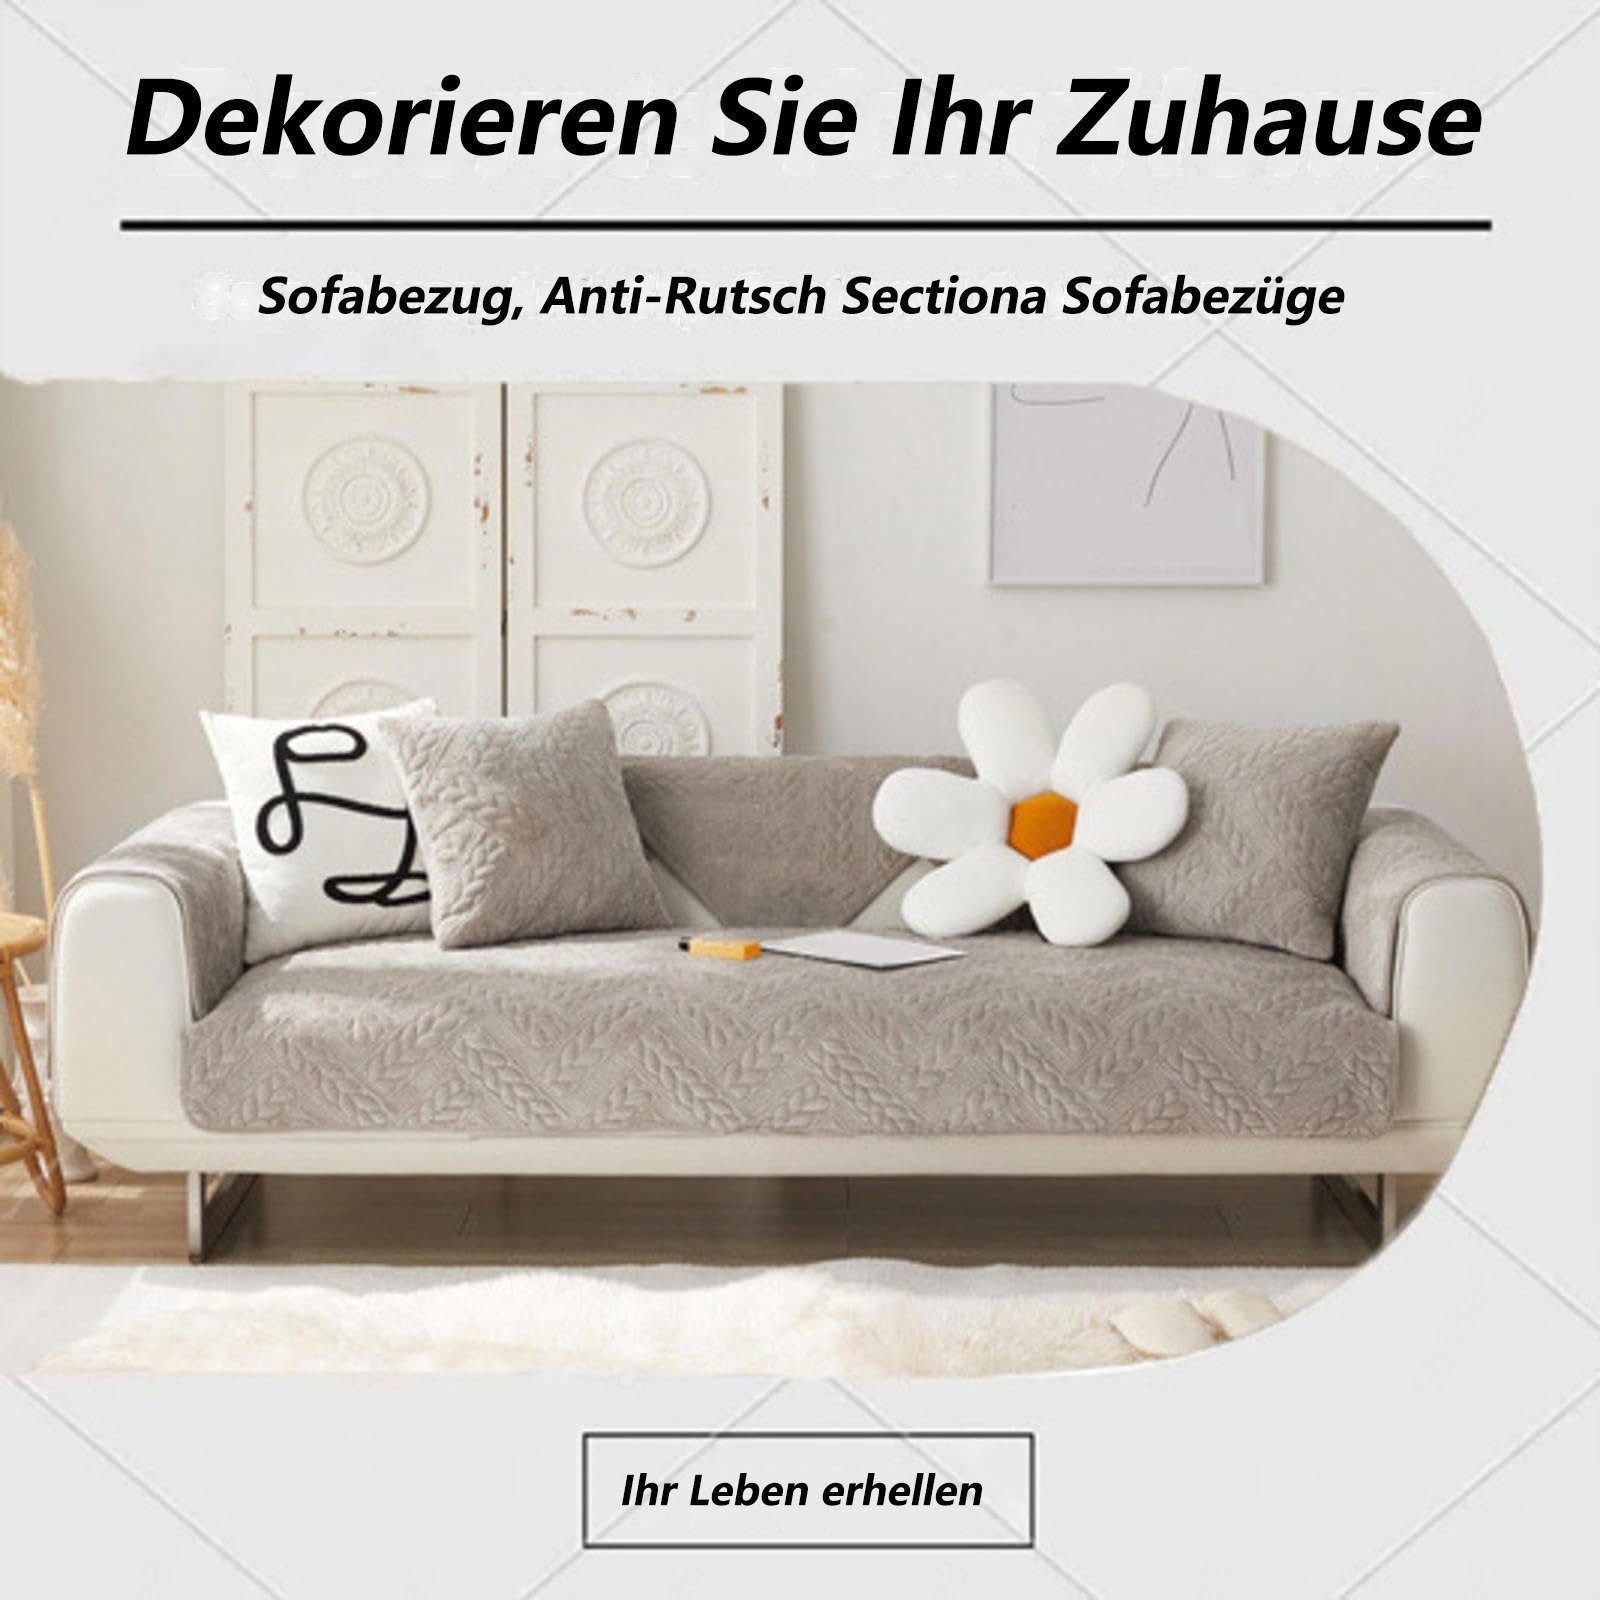 Juoungle Sofabezug Super rutschfeste Sofabezug hellgrau(70*180cm) Weicherdecke Sofadecke, warmer Sofabezug,